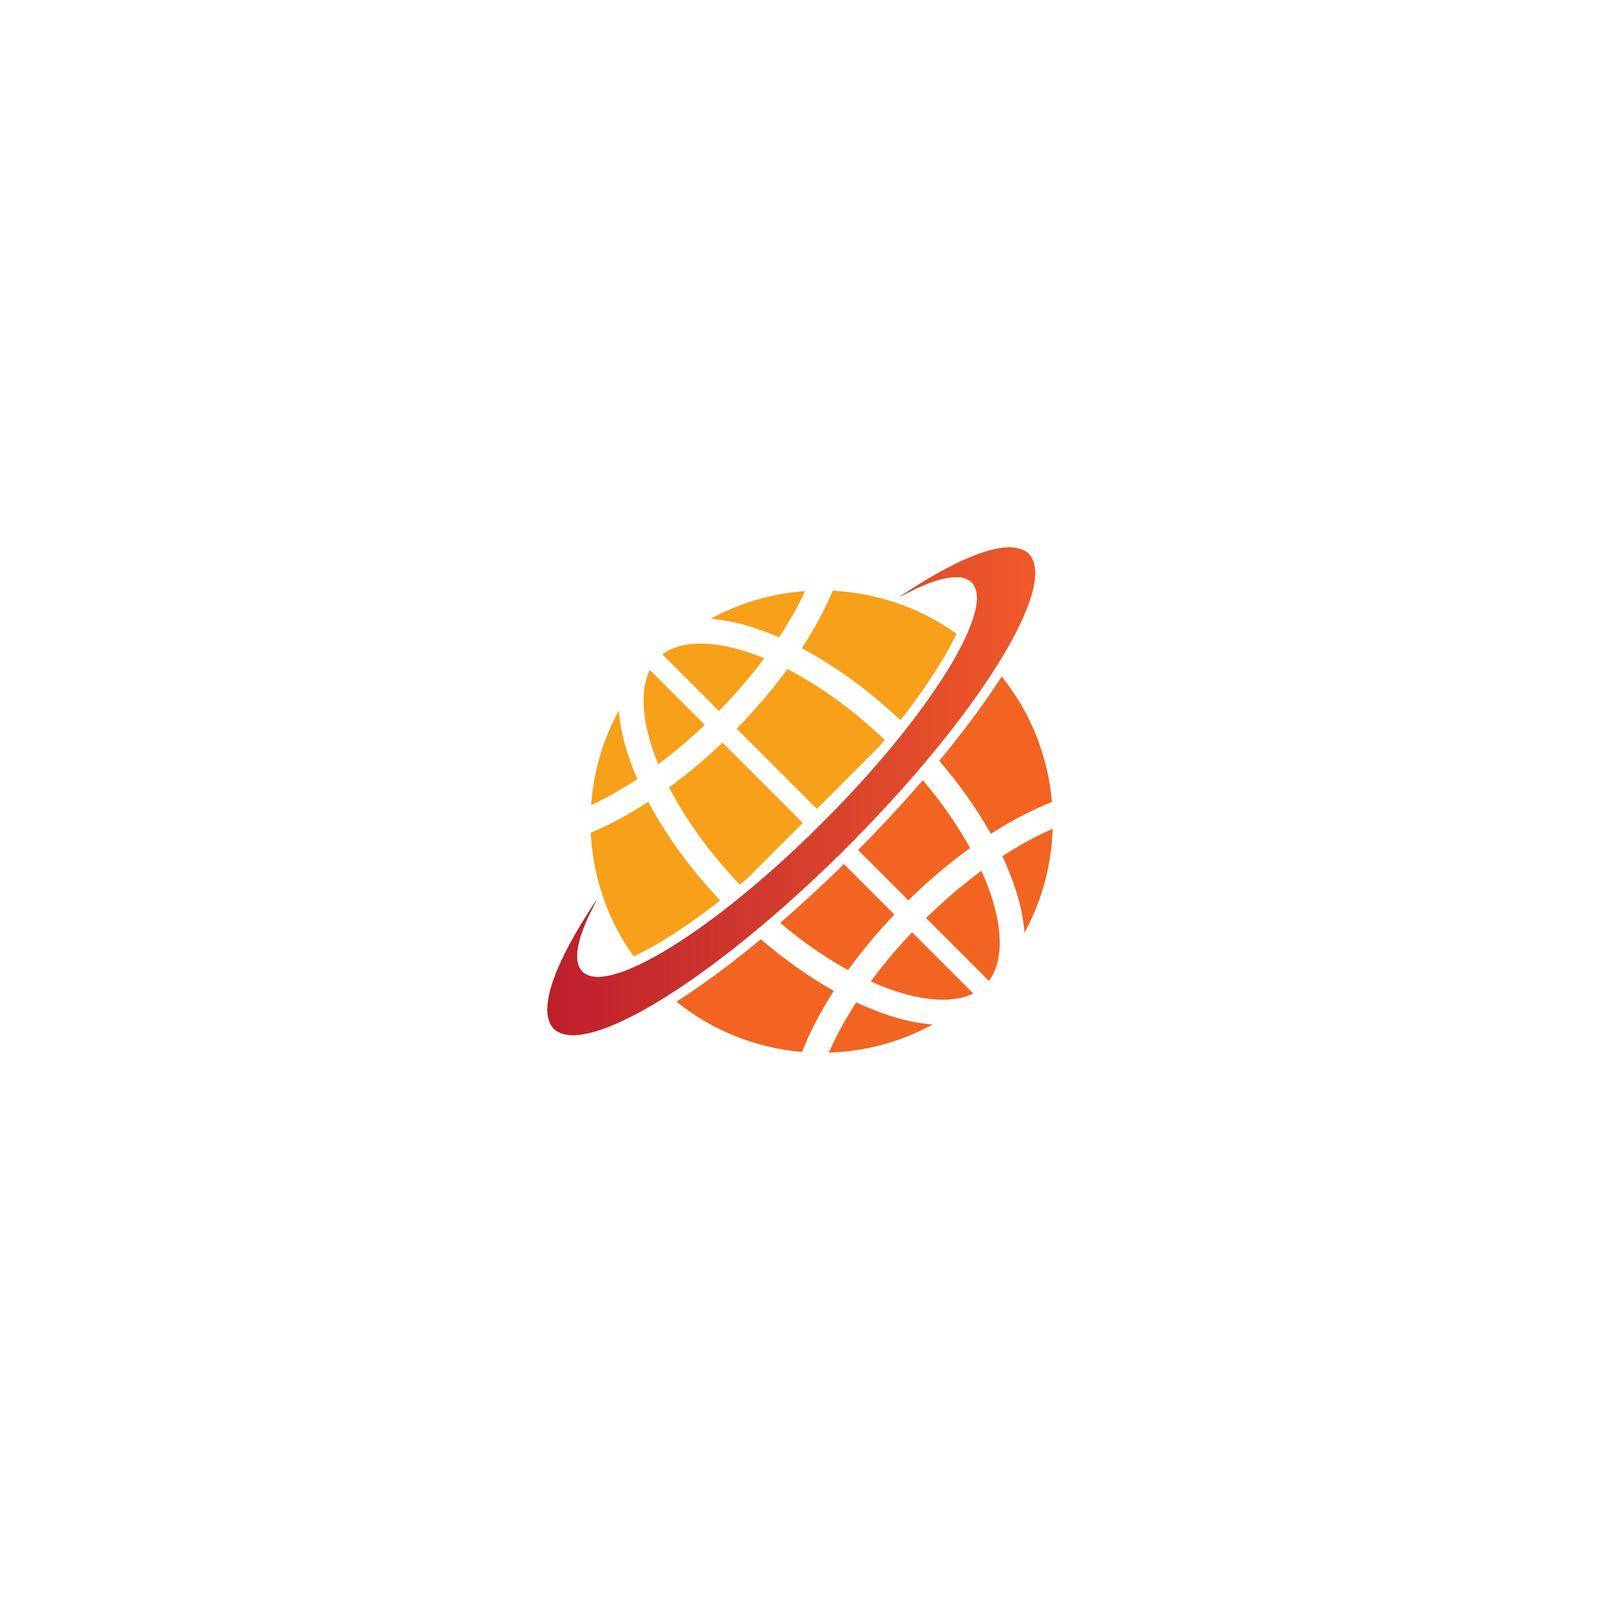 Globe logo vector design illustration